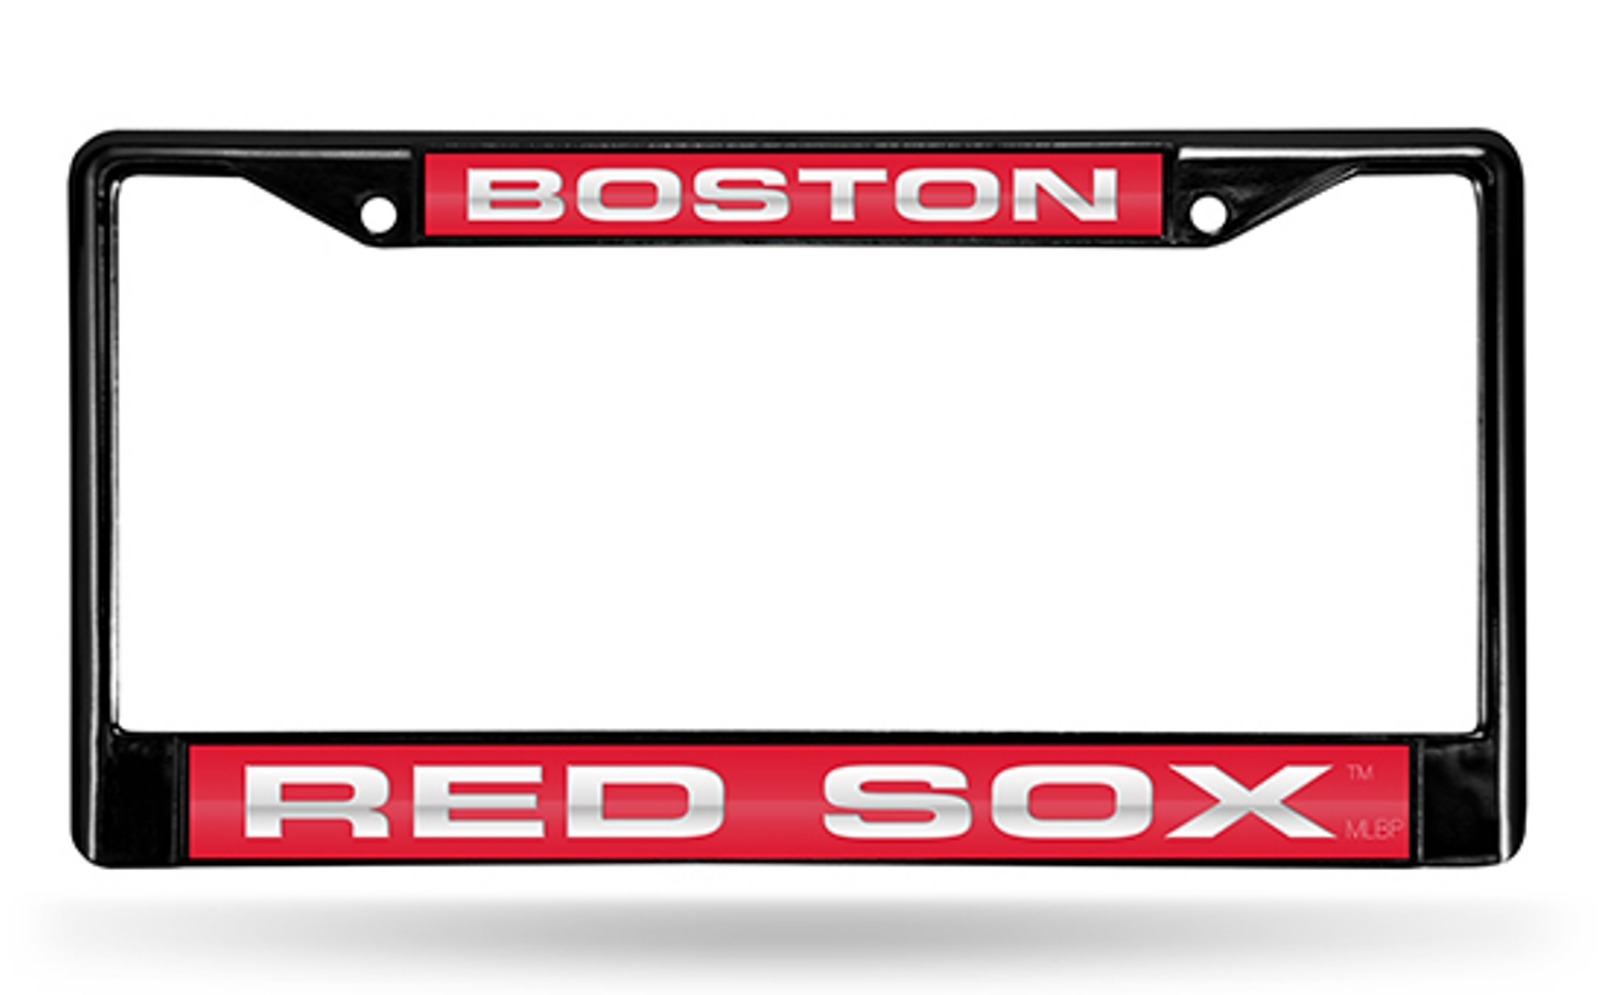 Boston Red Sox BLACK LASER FRAME Chrome Metal License Plate Cover Tag ...